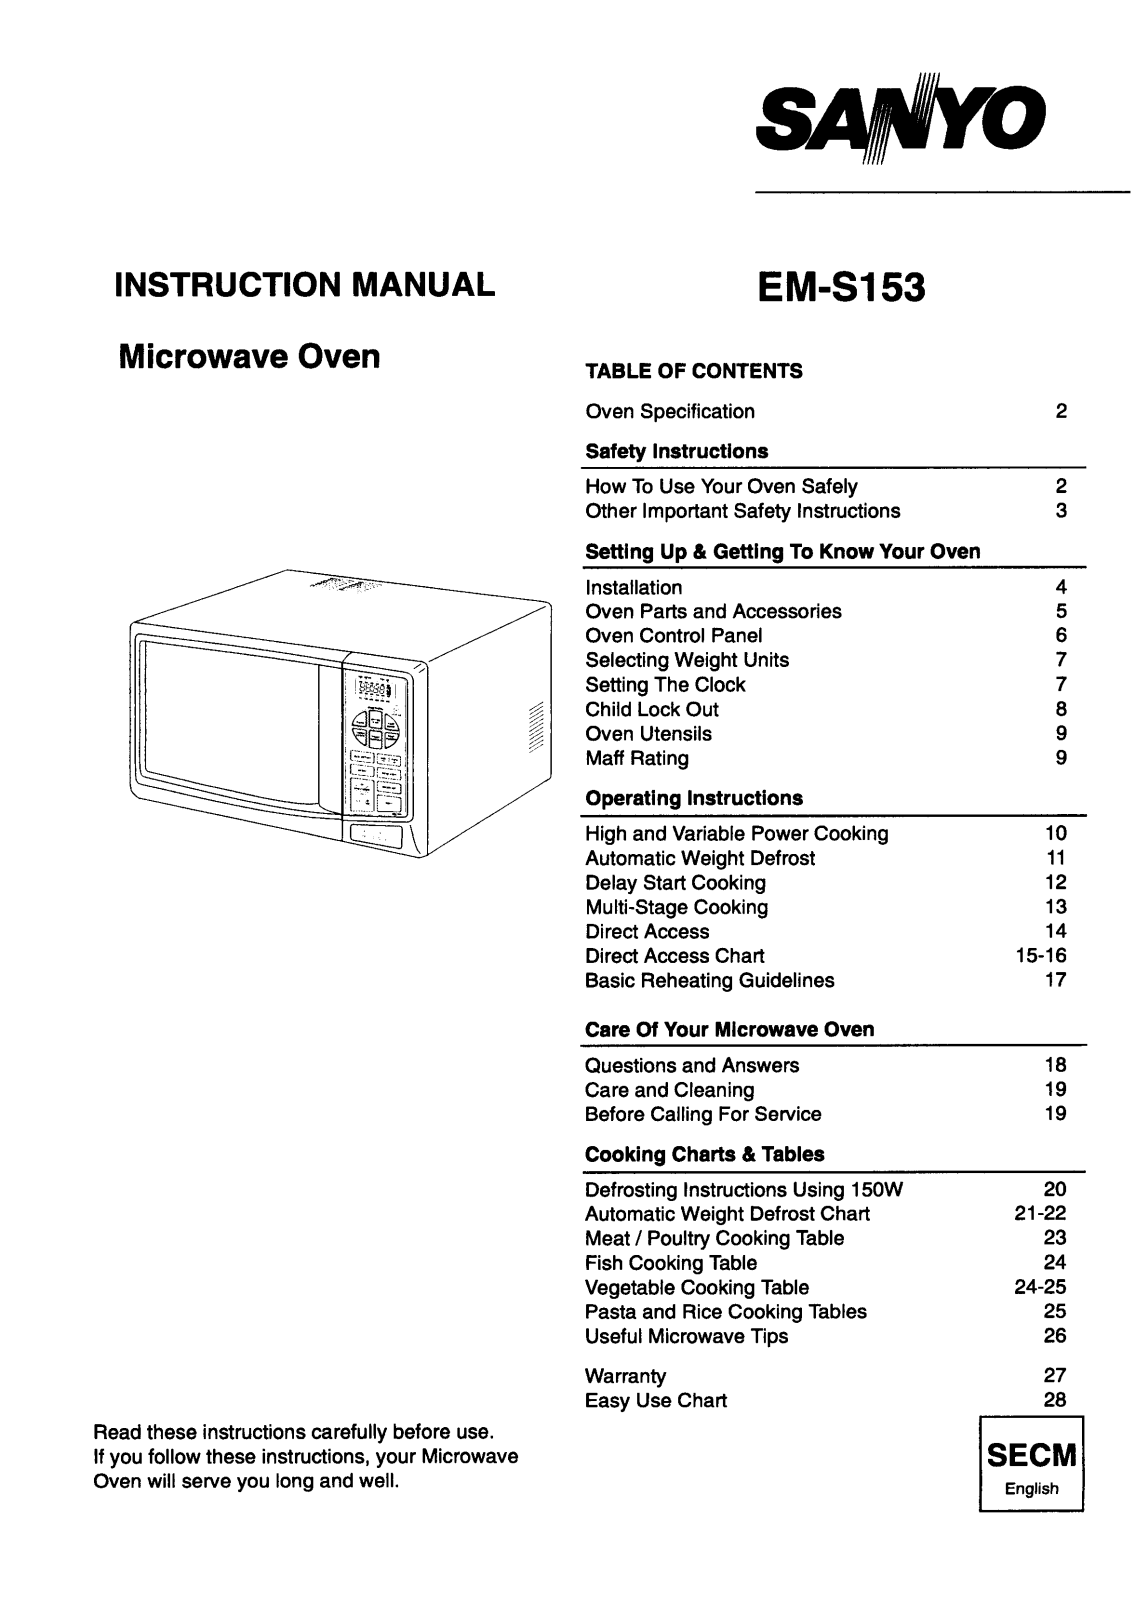 Sanyo EM-S153 Instruction Manual